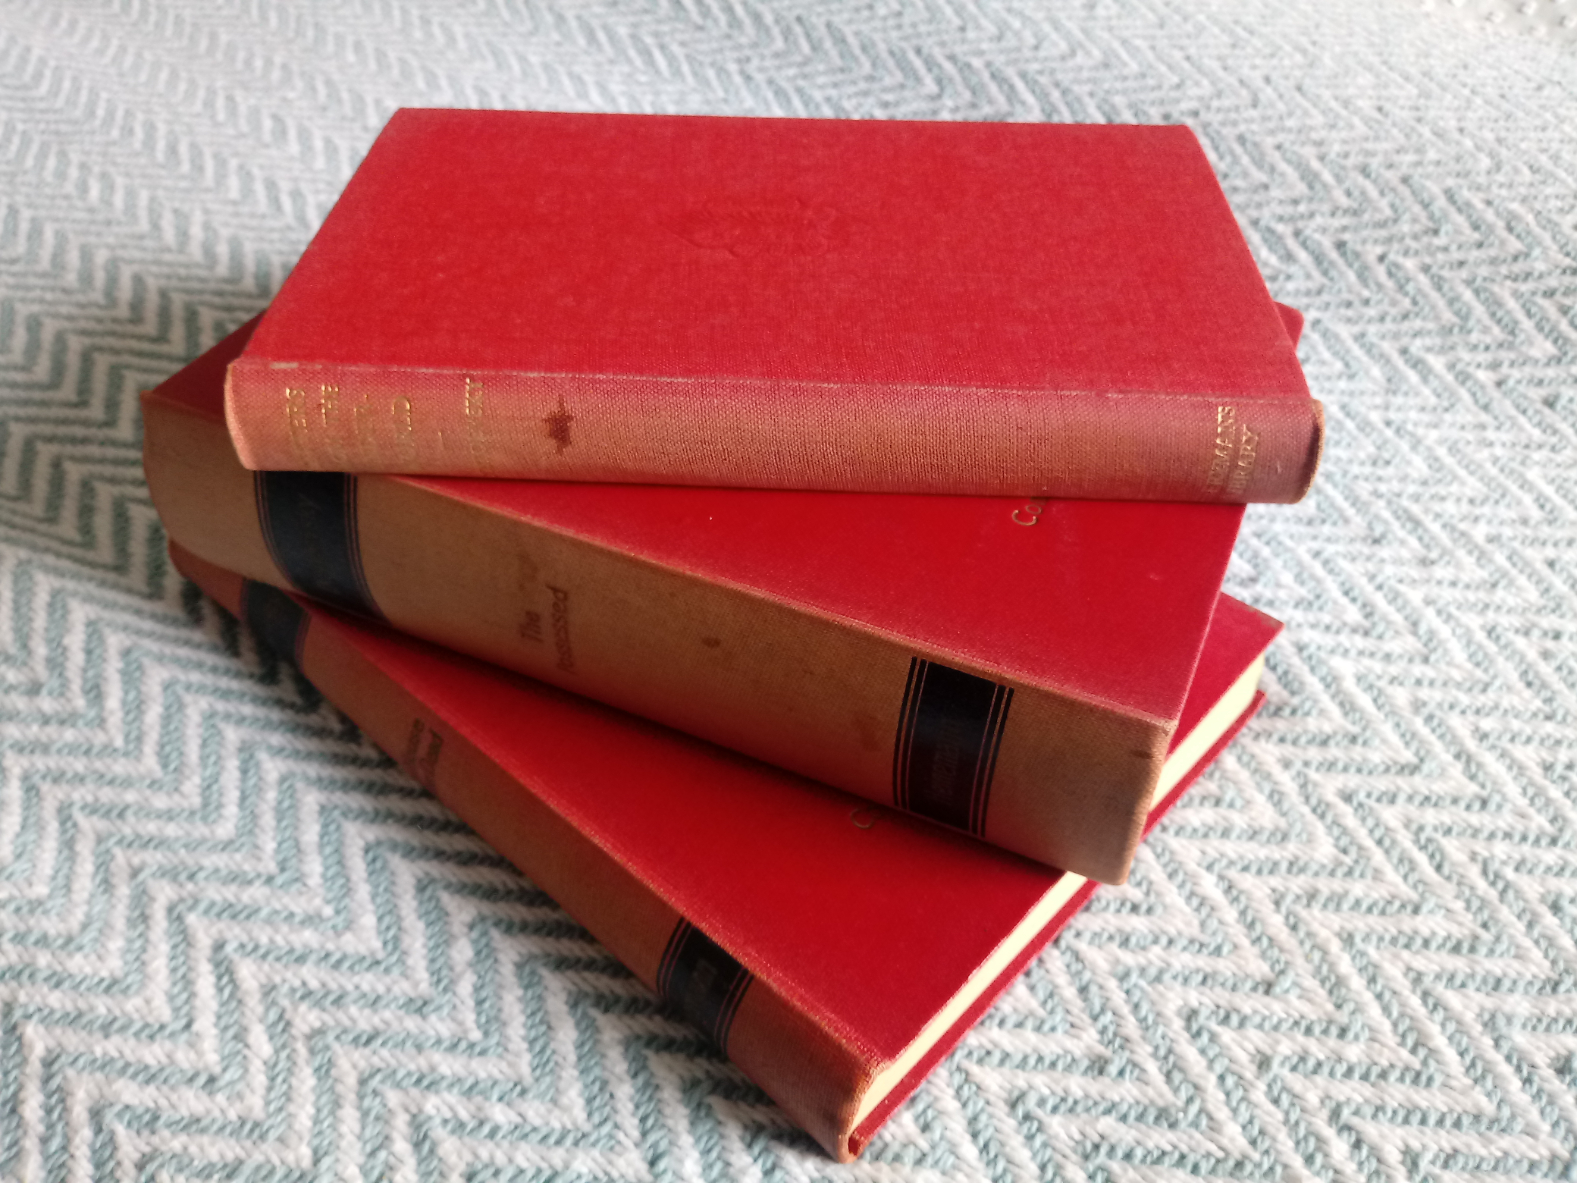 3 x Fyodor Dostoevsky hardback books 2 books translated by Constance Garnett Published 1948